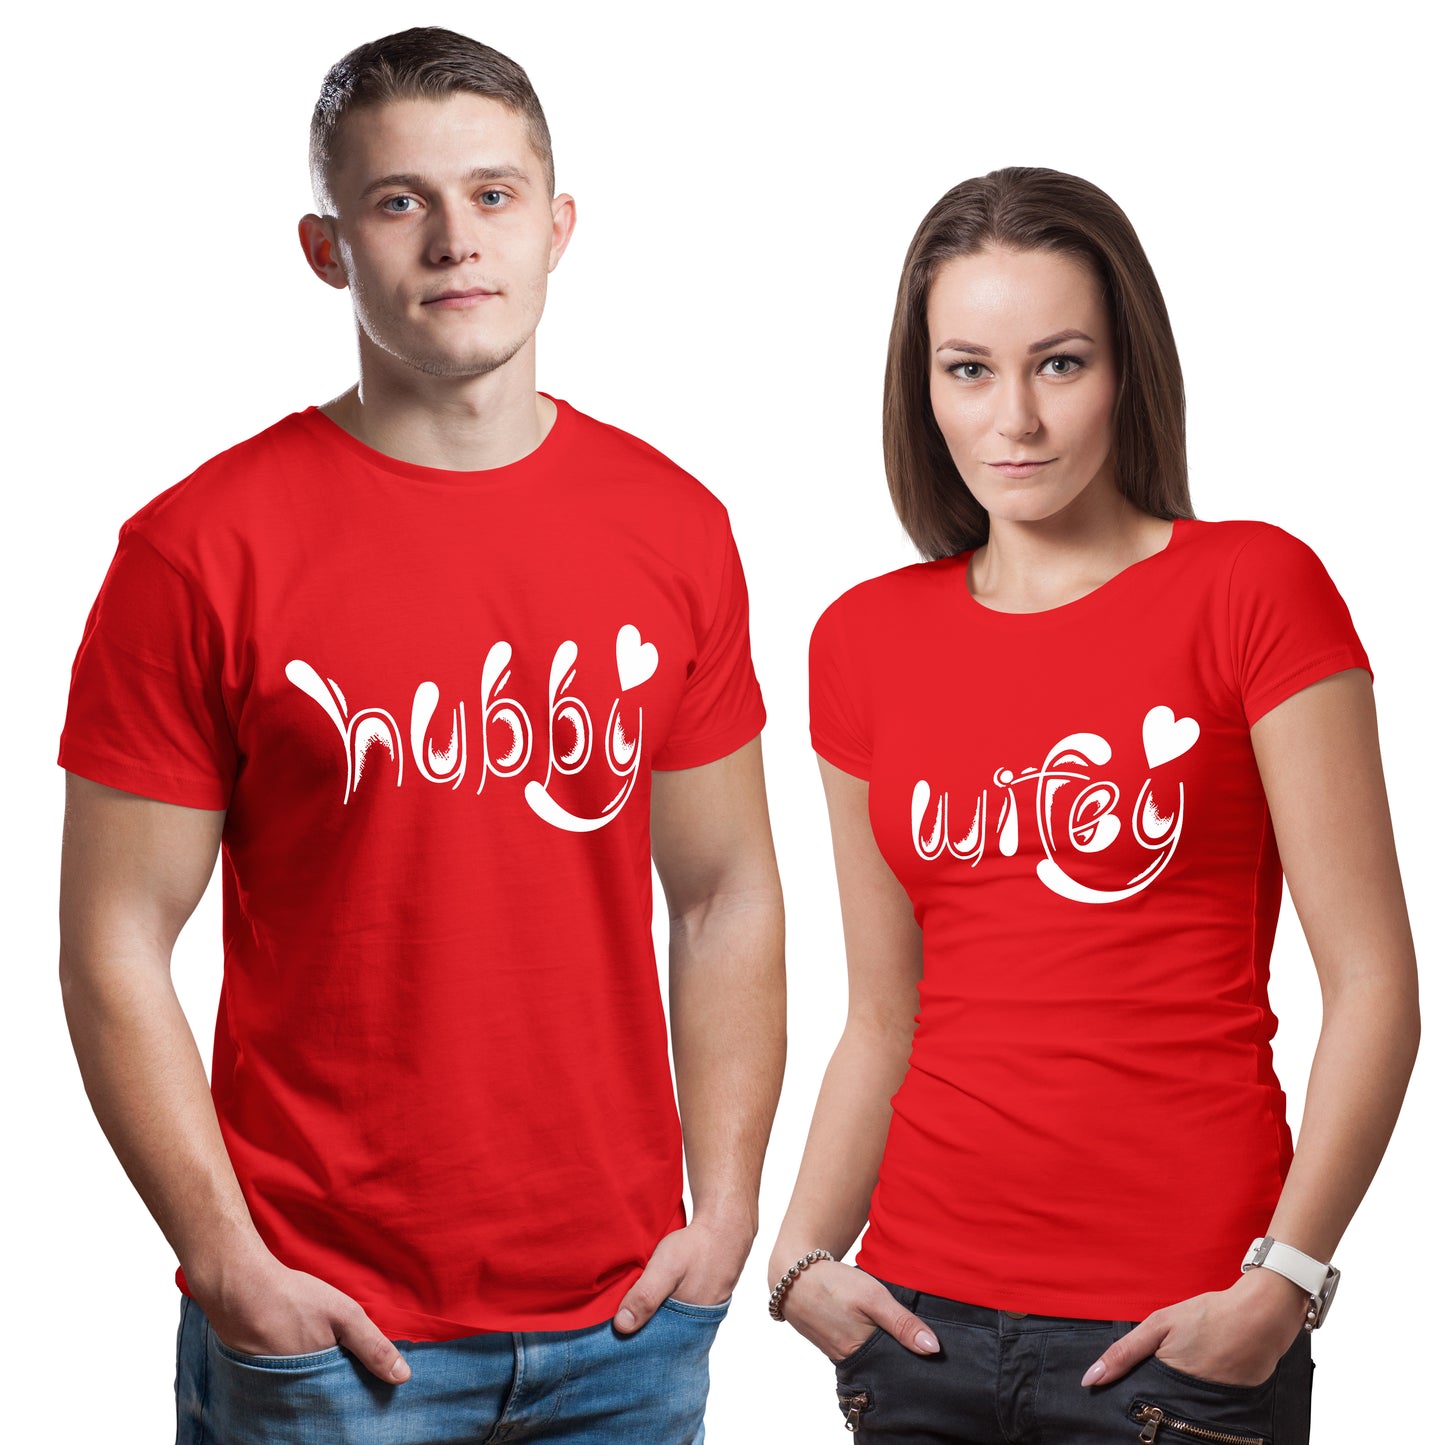 Hubby Wifeymatching Couple T shirts- Red